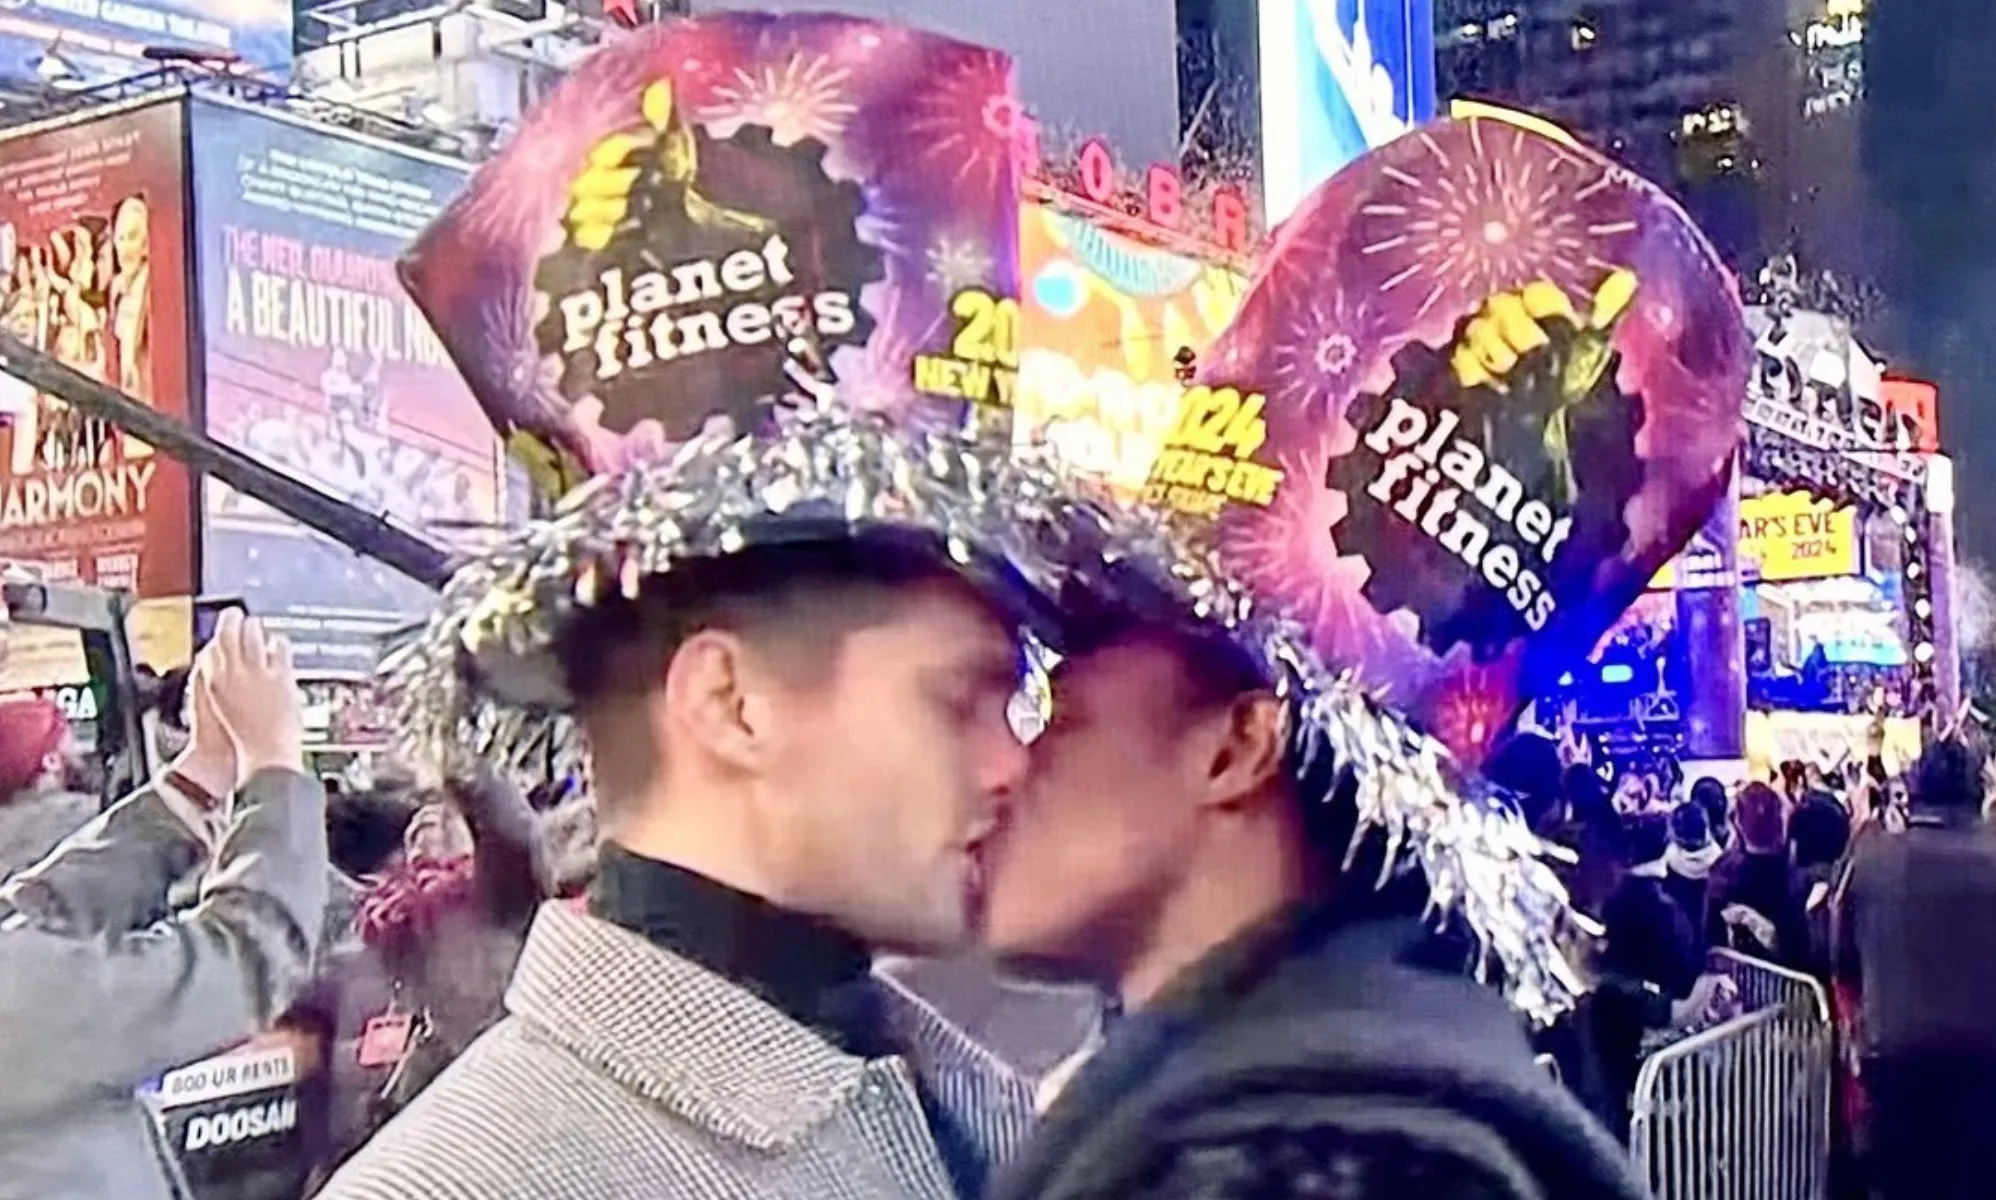 CNN airs interracial gay kiss on New Year's Eve, bigots lose minds